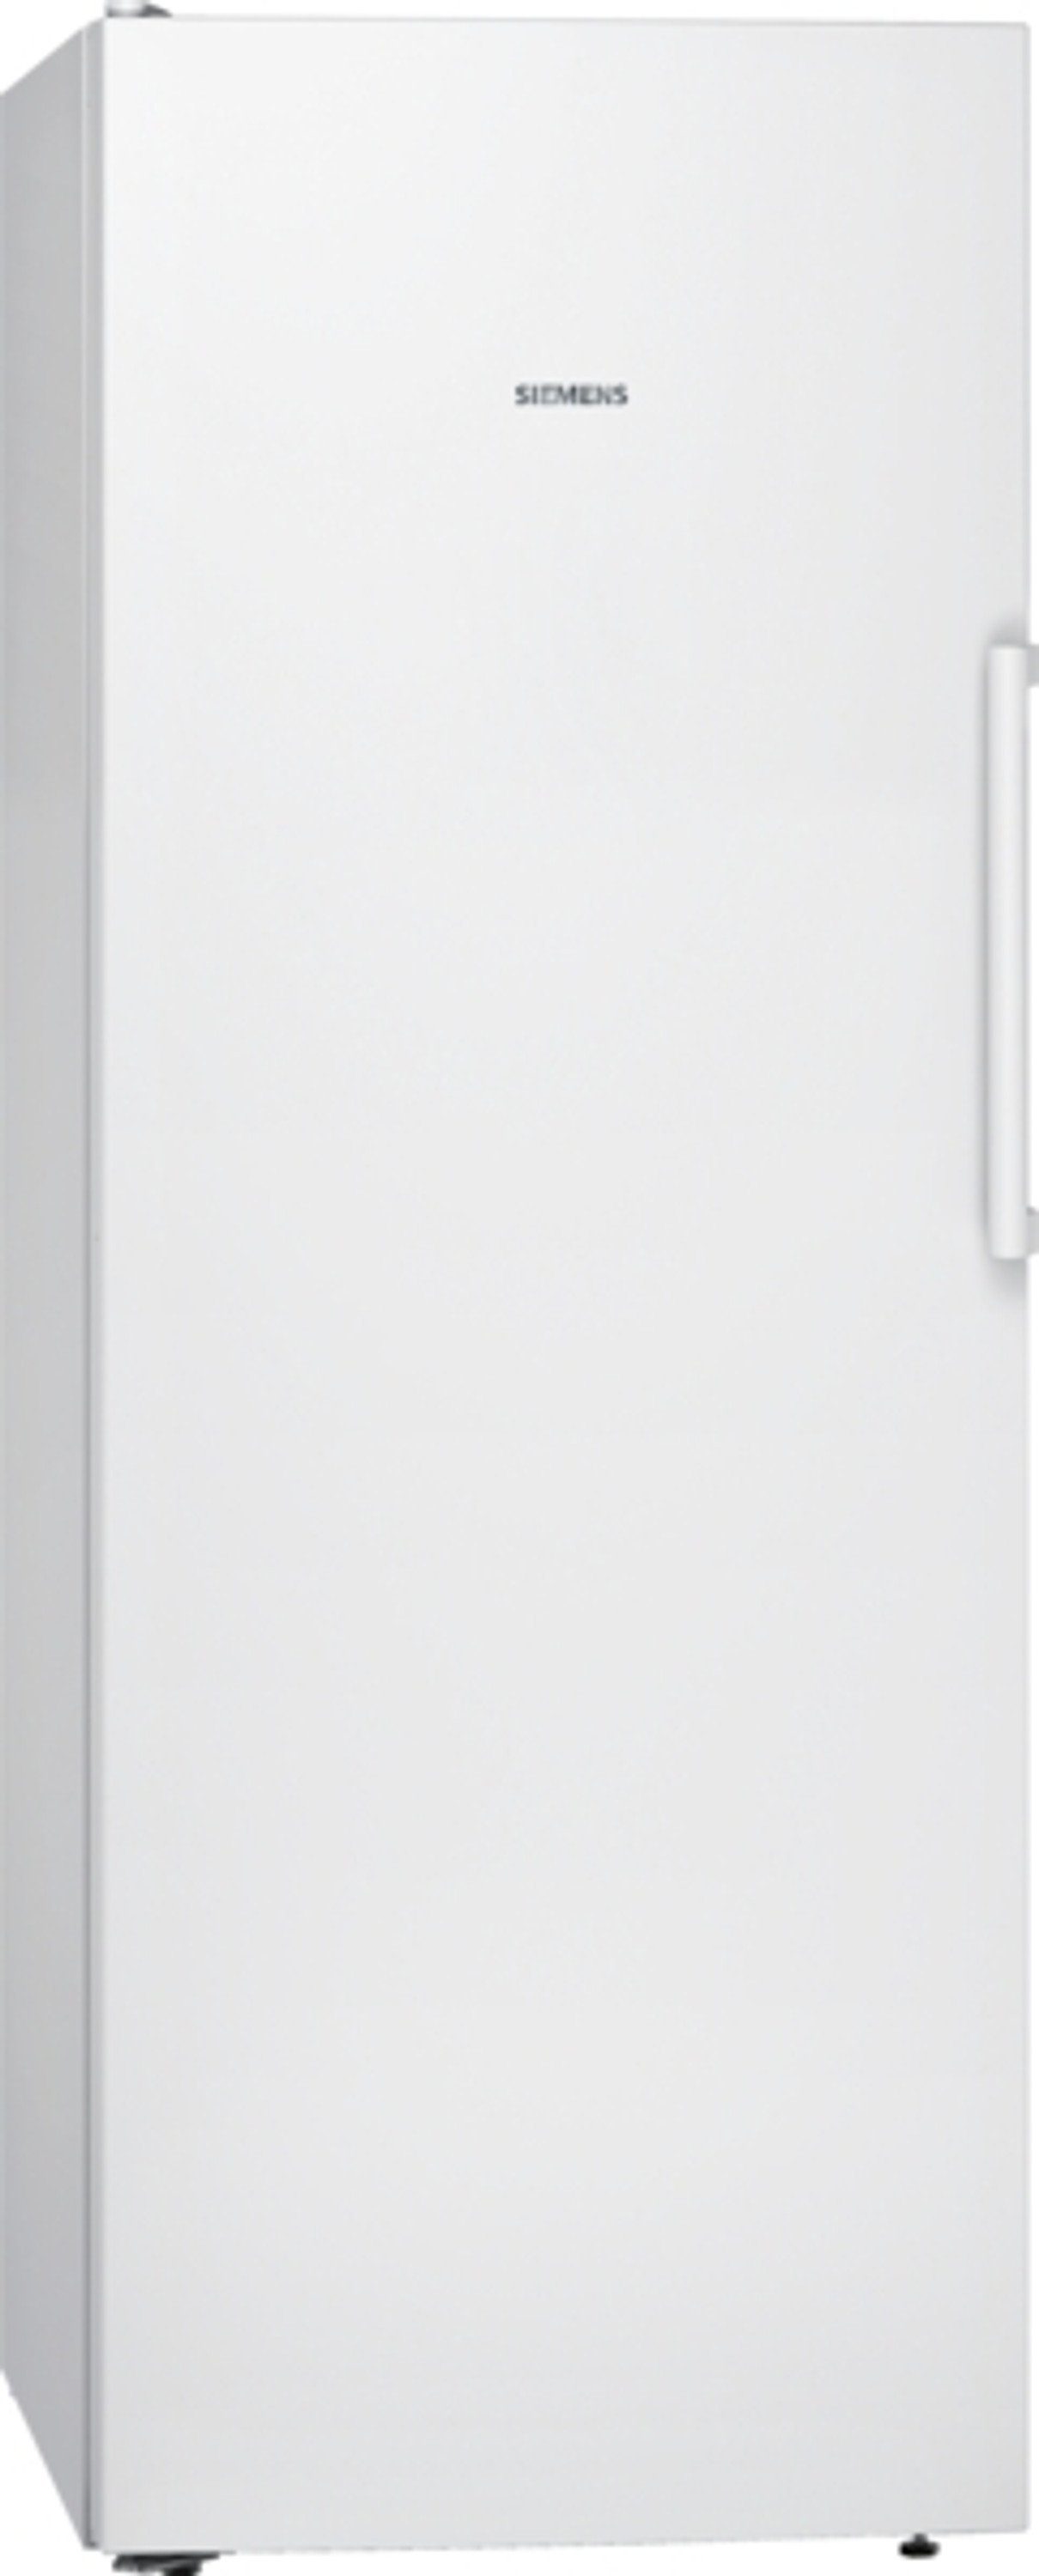 SIEMENS Kühlschrank KS29VVWEP, 161 cm hoch, 60 cm breit